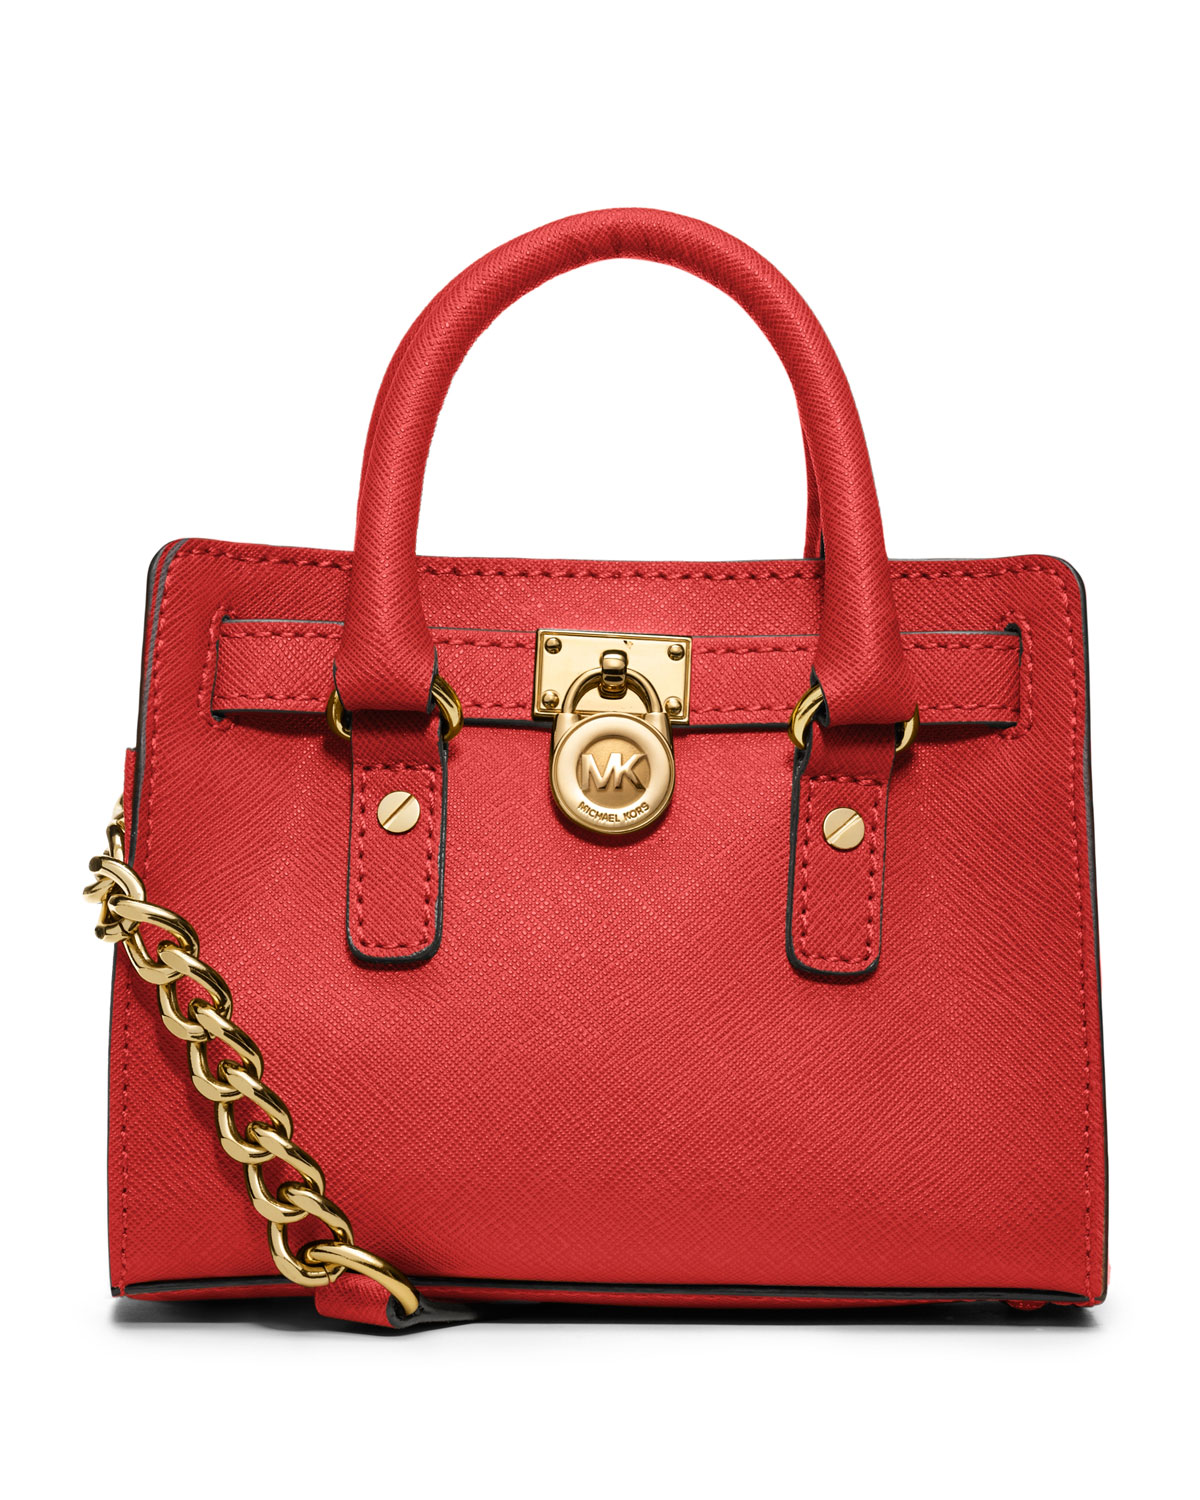 Lyst - Michael Kors Mini Hamilton Saffiano Messenger Bag in Red